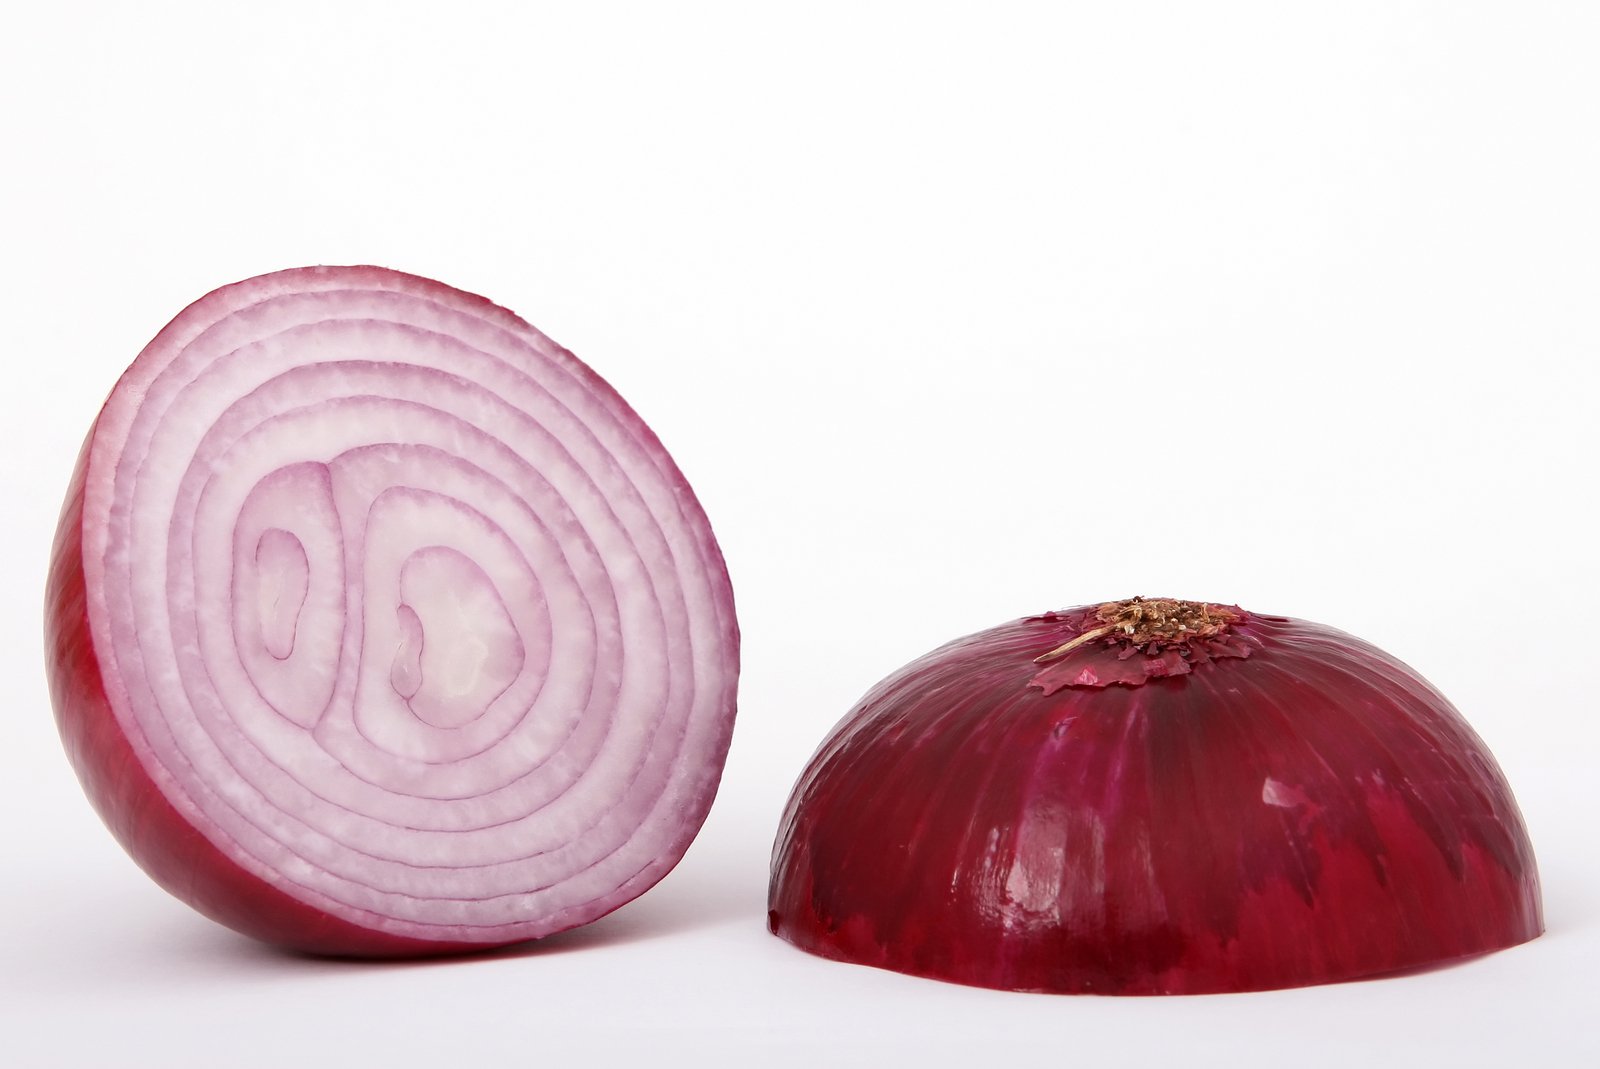 a peeled red onion is near an onion slice